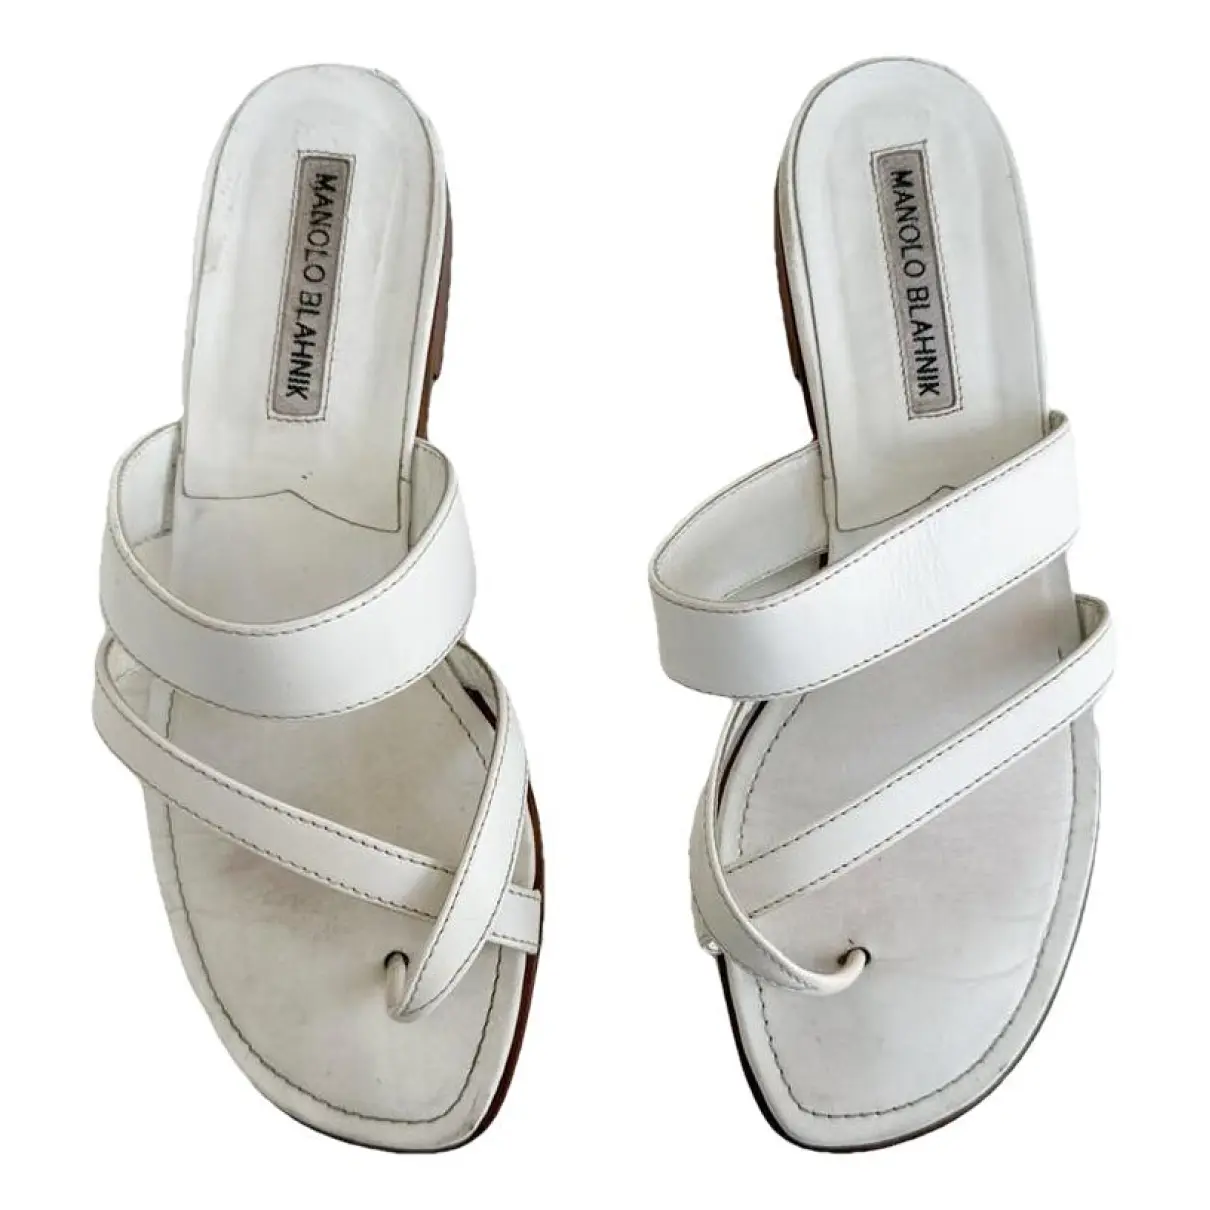 Susa leather sandal